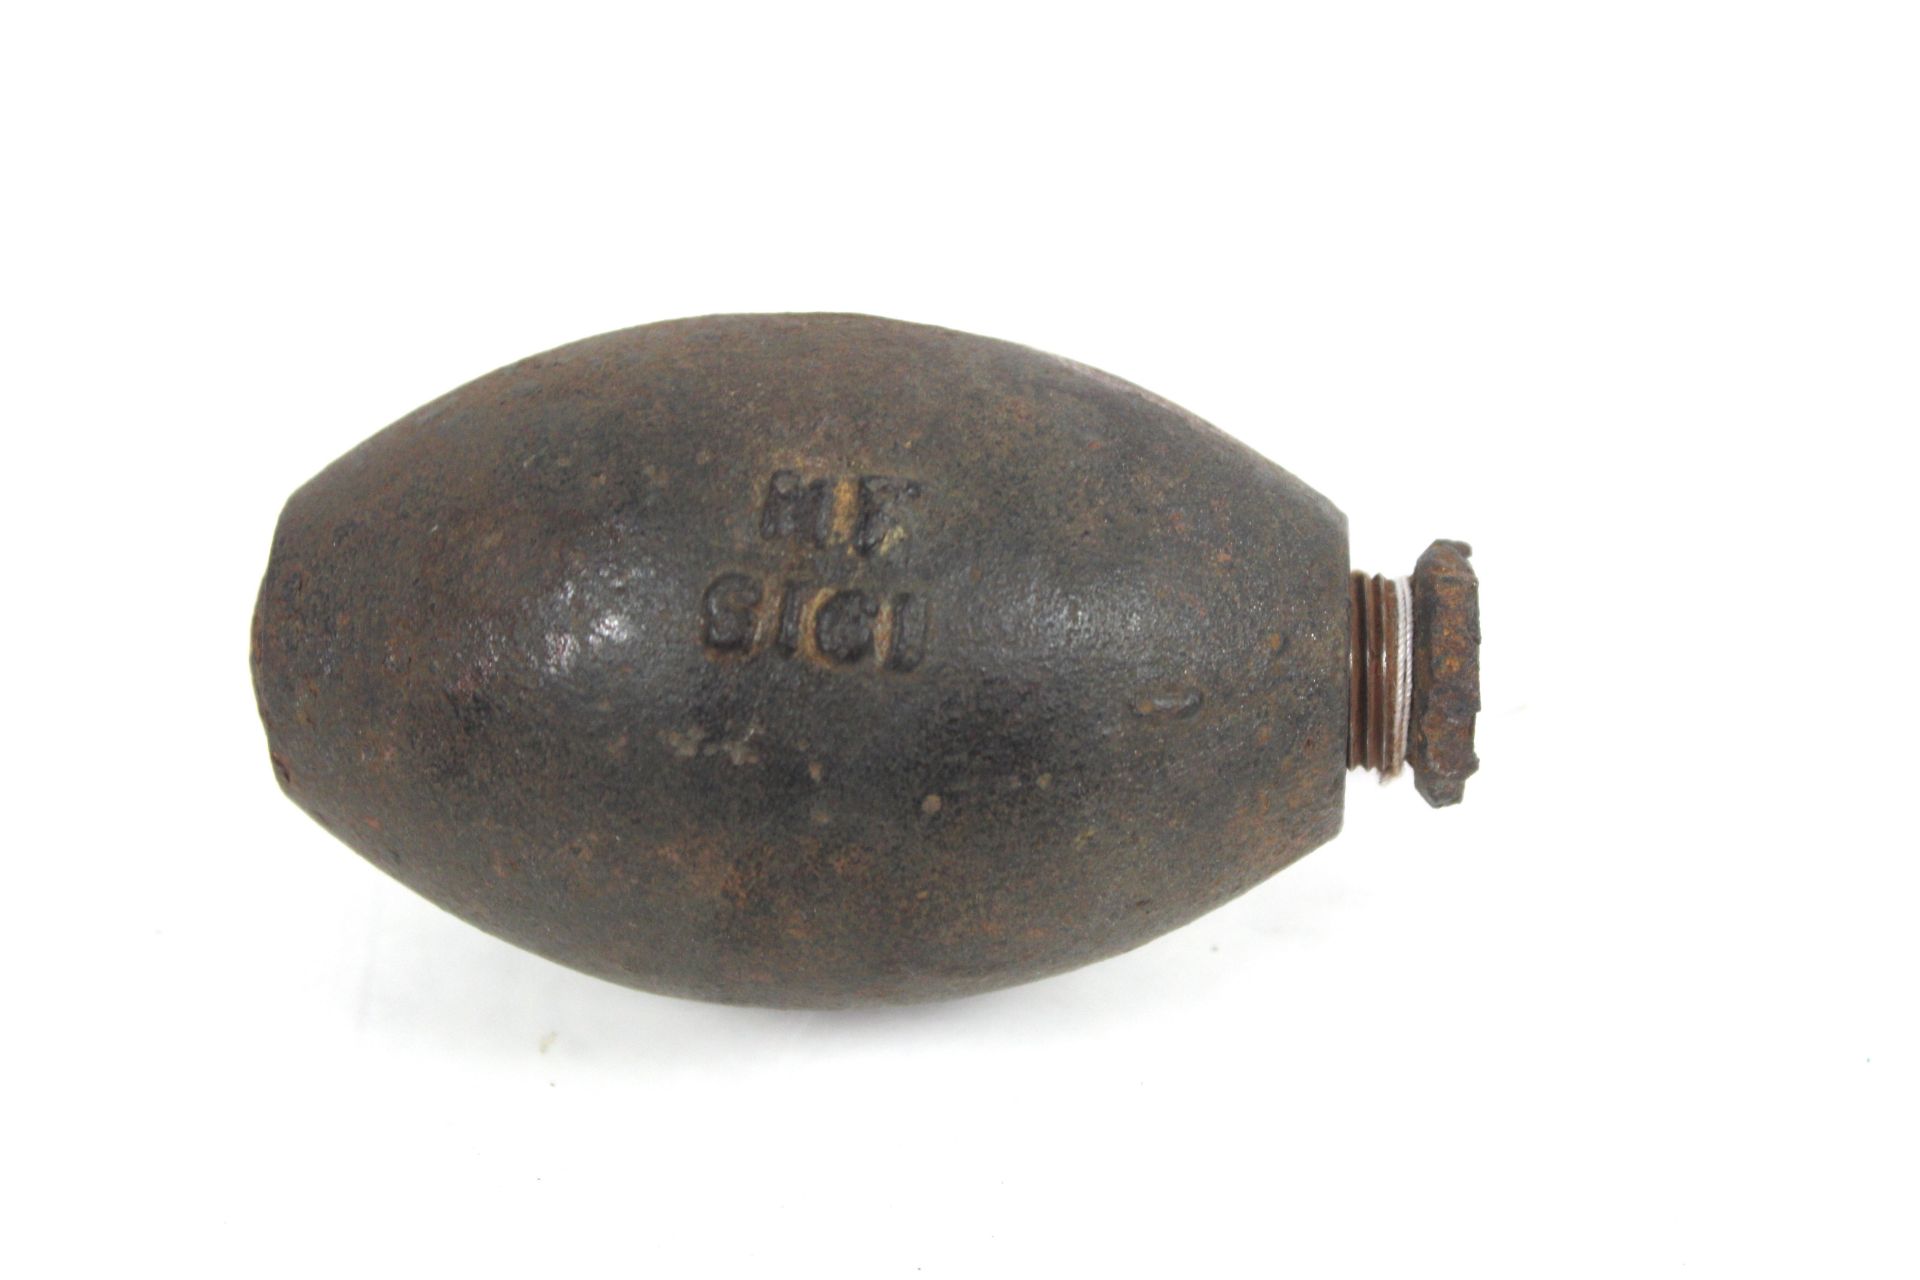 An inert British WWI era No.16 (Lemon) grenade dat